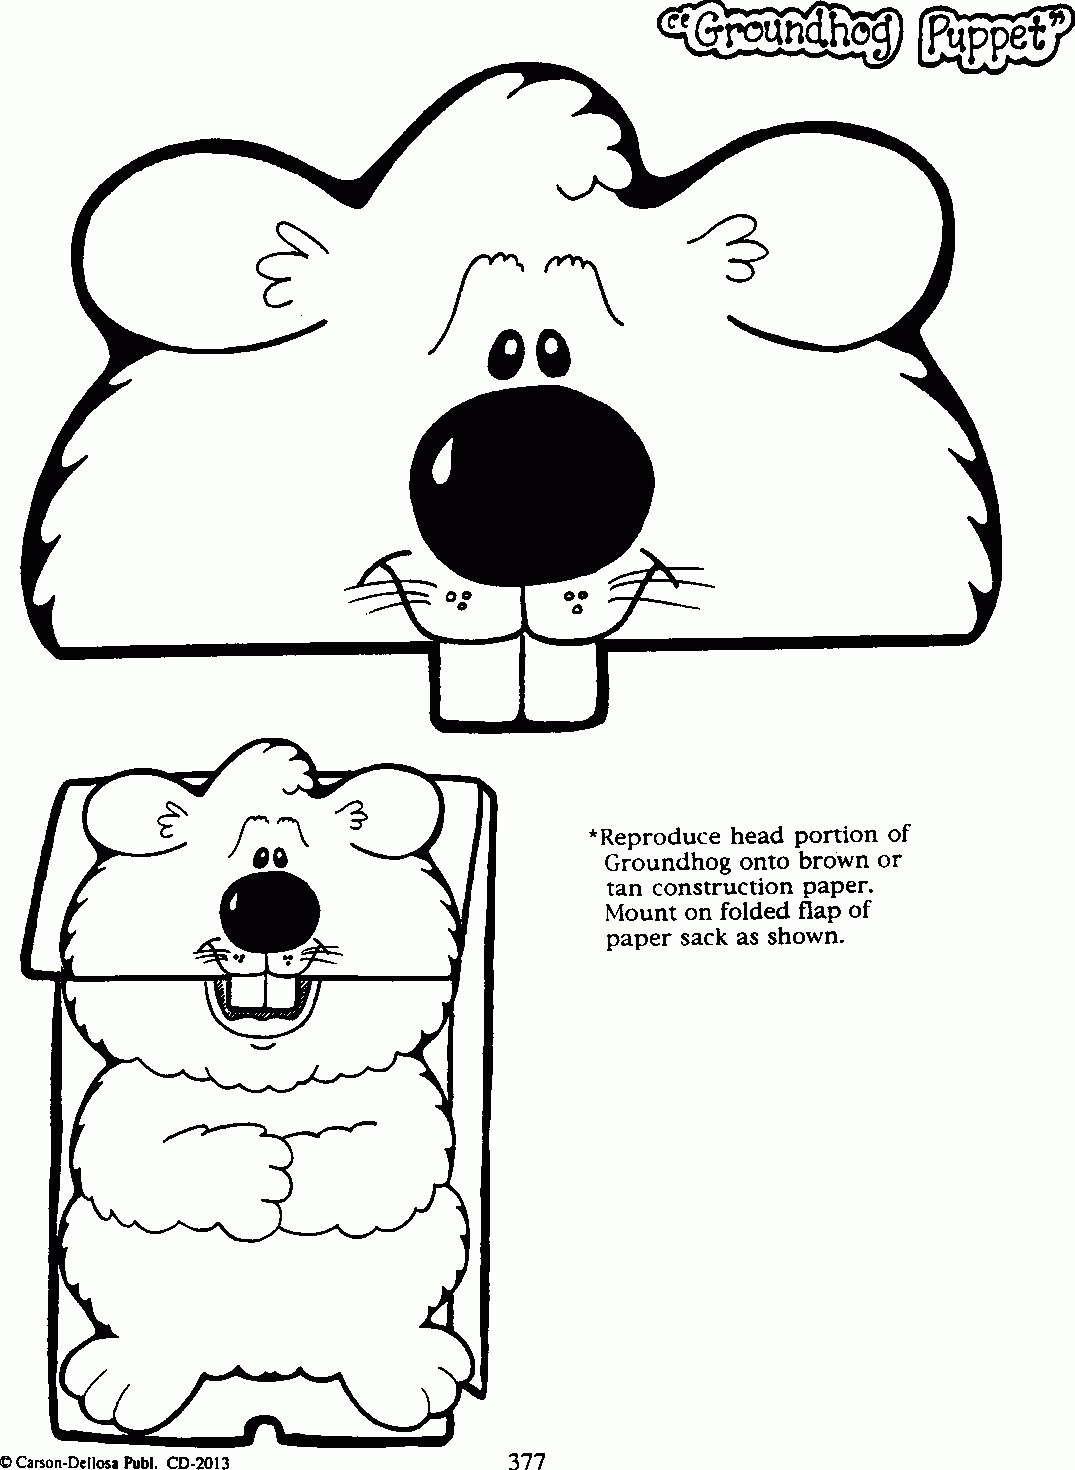 Groundhog Paper Bag Puppet (Under Wake Up Mr. Groundhog - Free Printable Groundhog Day Booklet